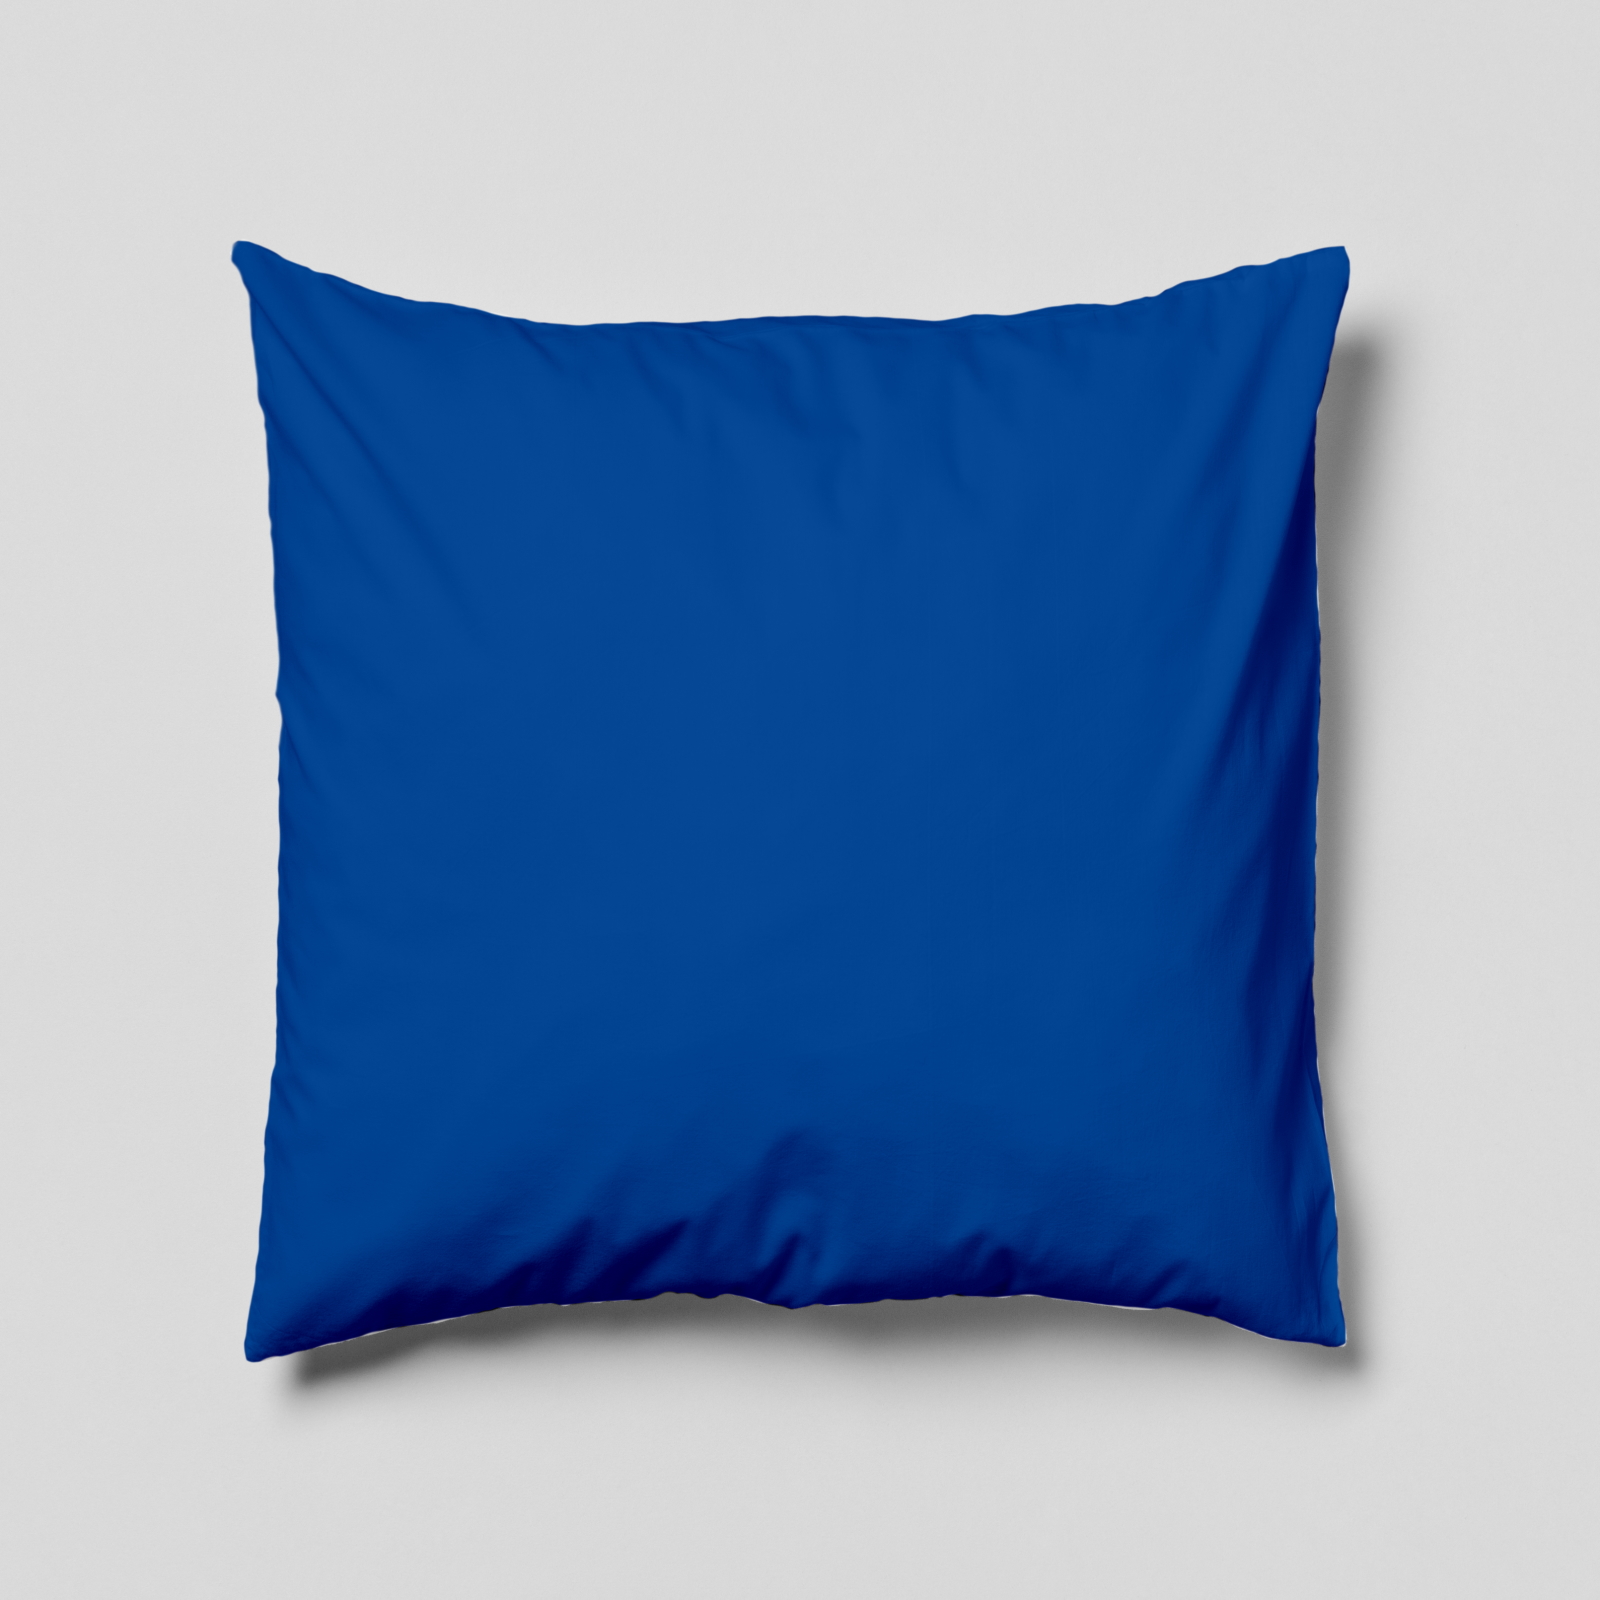 Komplettkissen Polyester-Blau / 40x40 cm